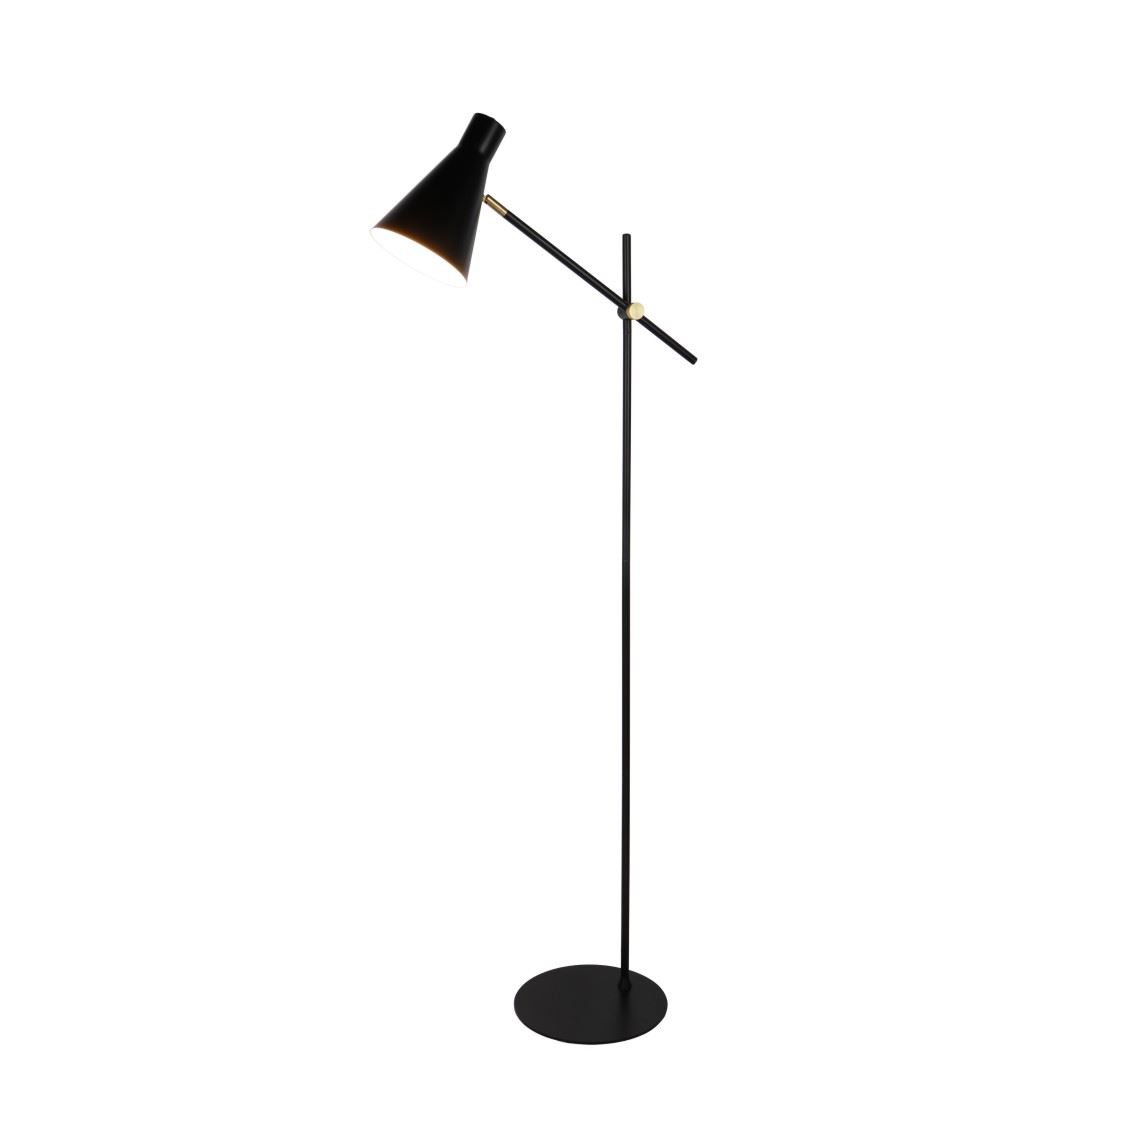 Blair 40w E27 Floor Lamp Black In 2019 Products Black regarding dimensions 1140 X 1140